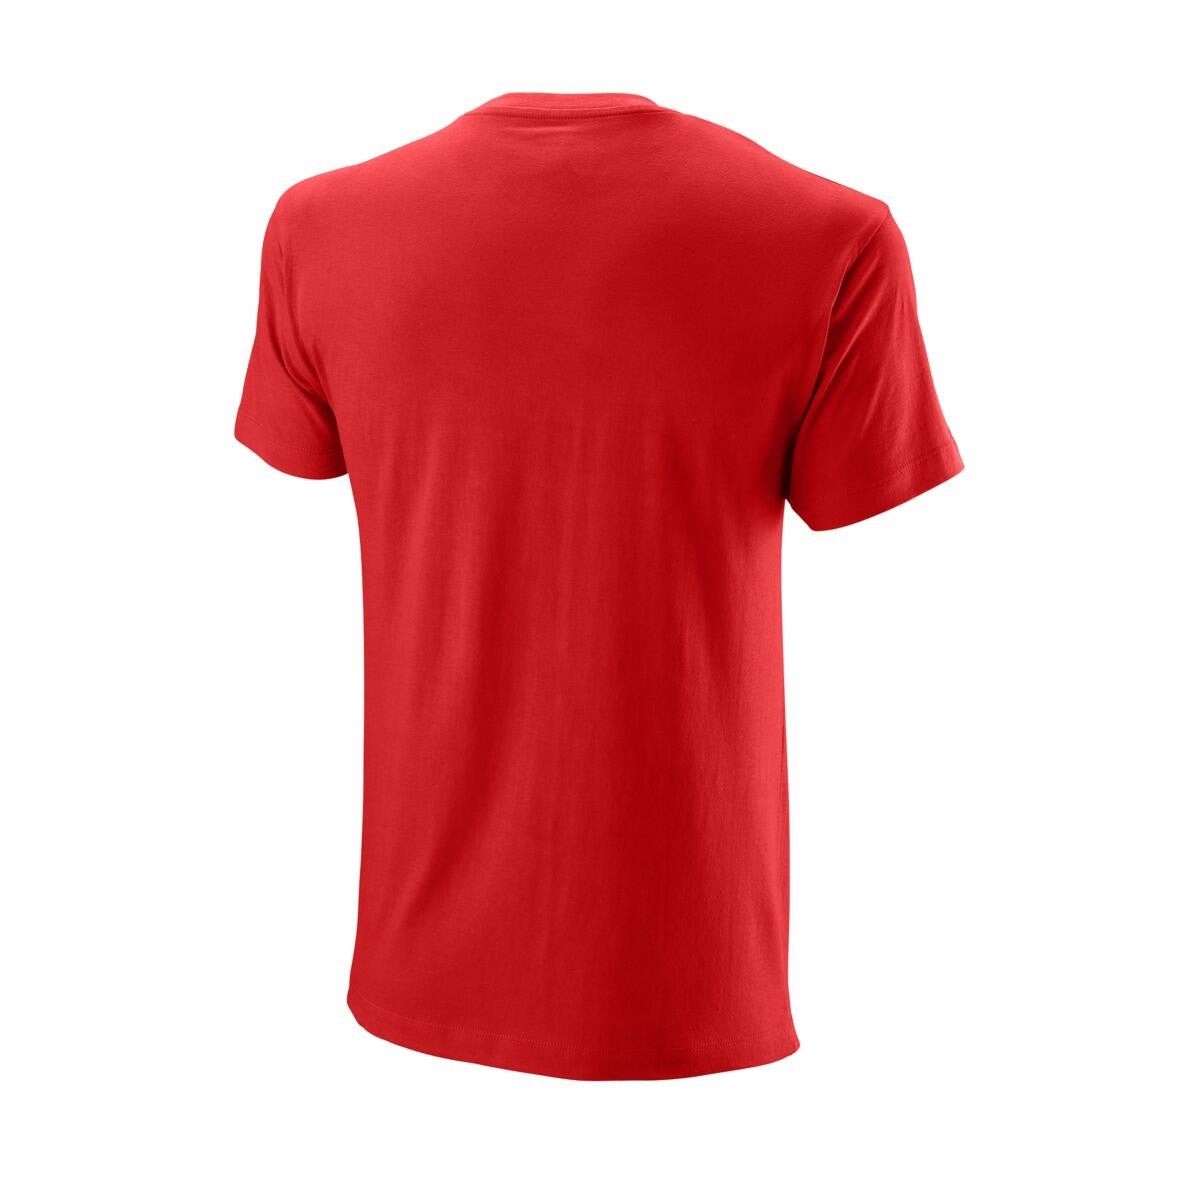 Wilson Padel Script Cotton T-shirt - Red